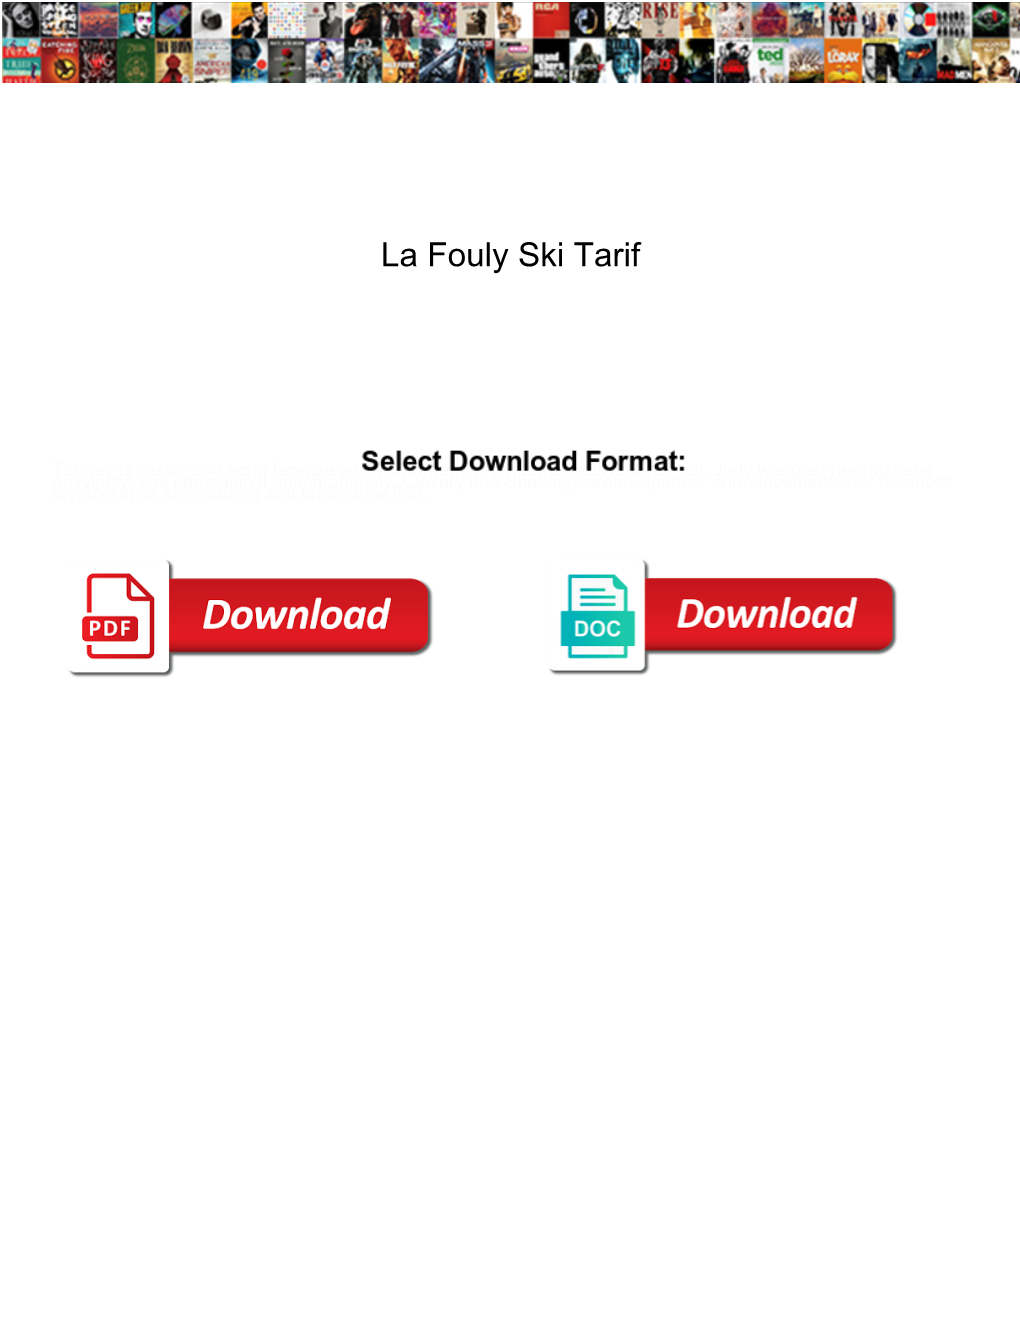 La Fouly Ski Tarif